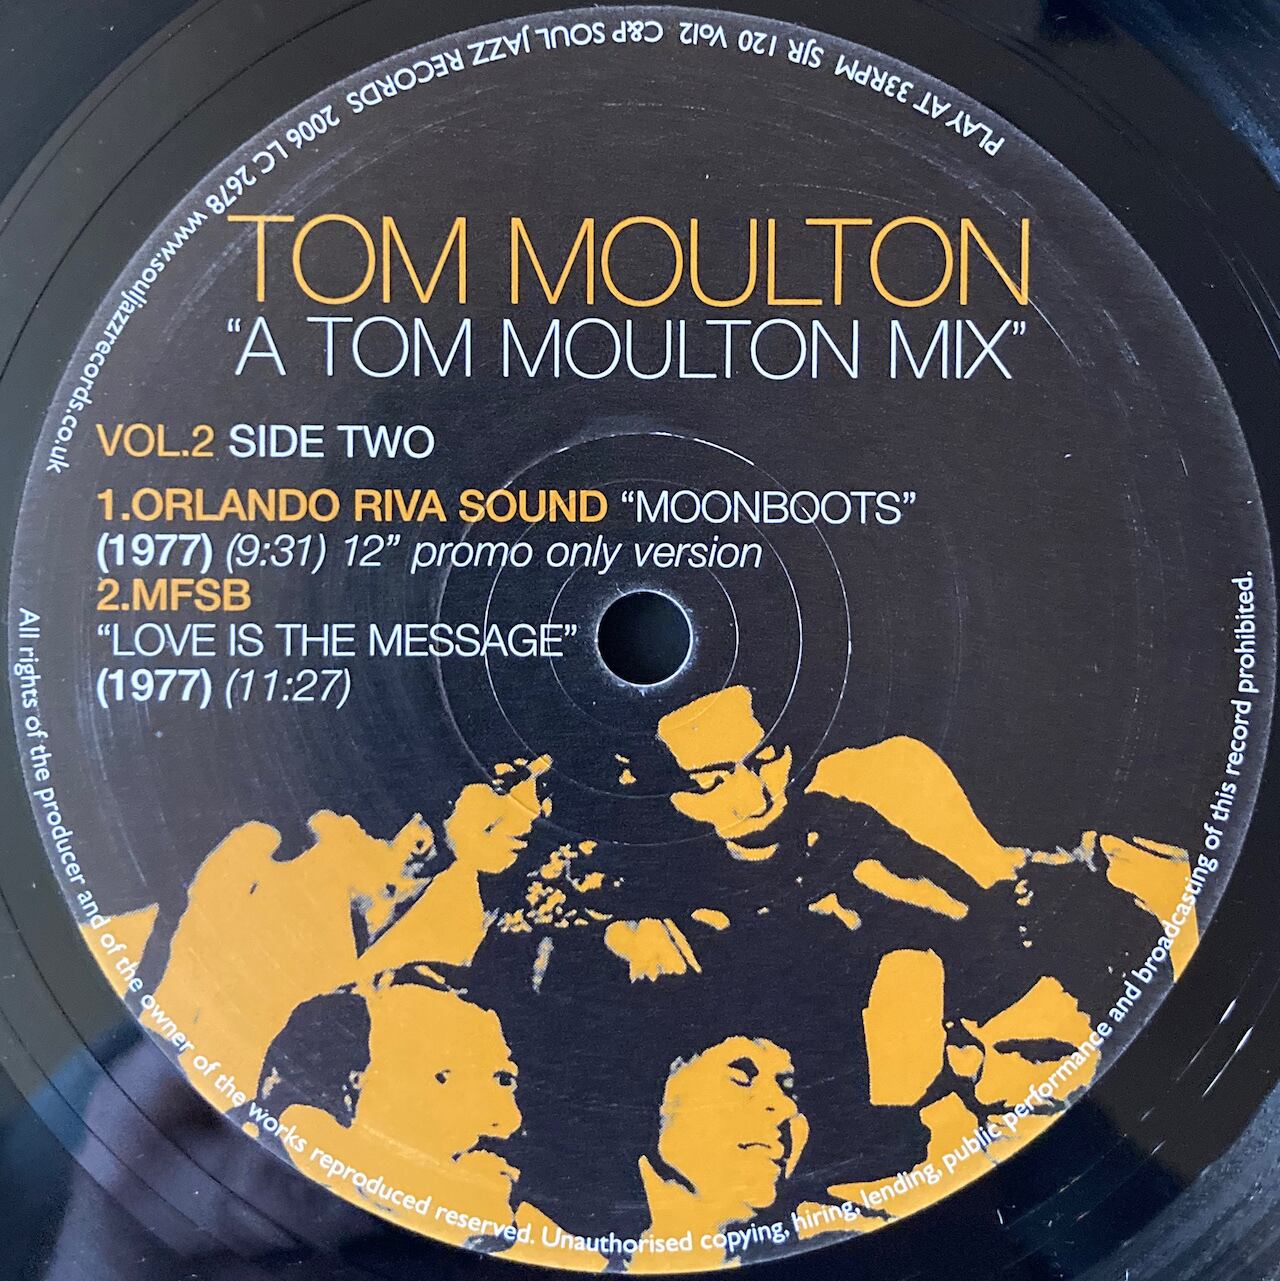 新品未開封 TOM MOULTON REMIXES PHILLY BOX LP